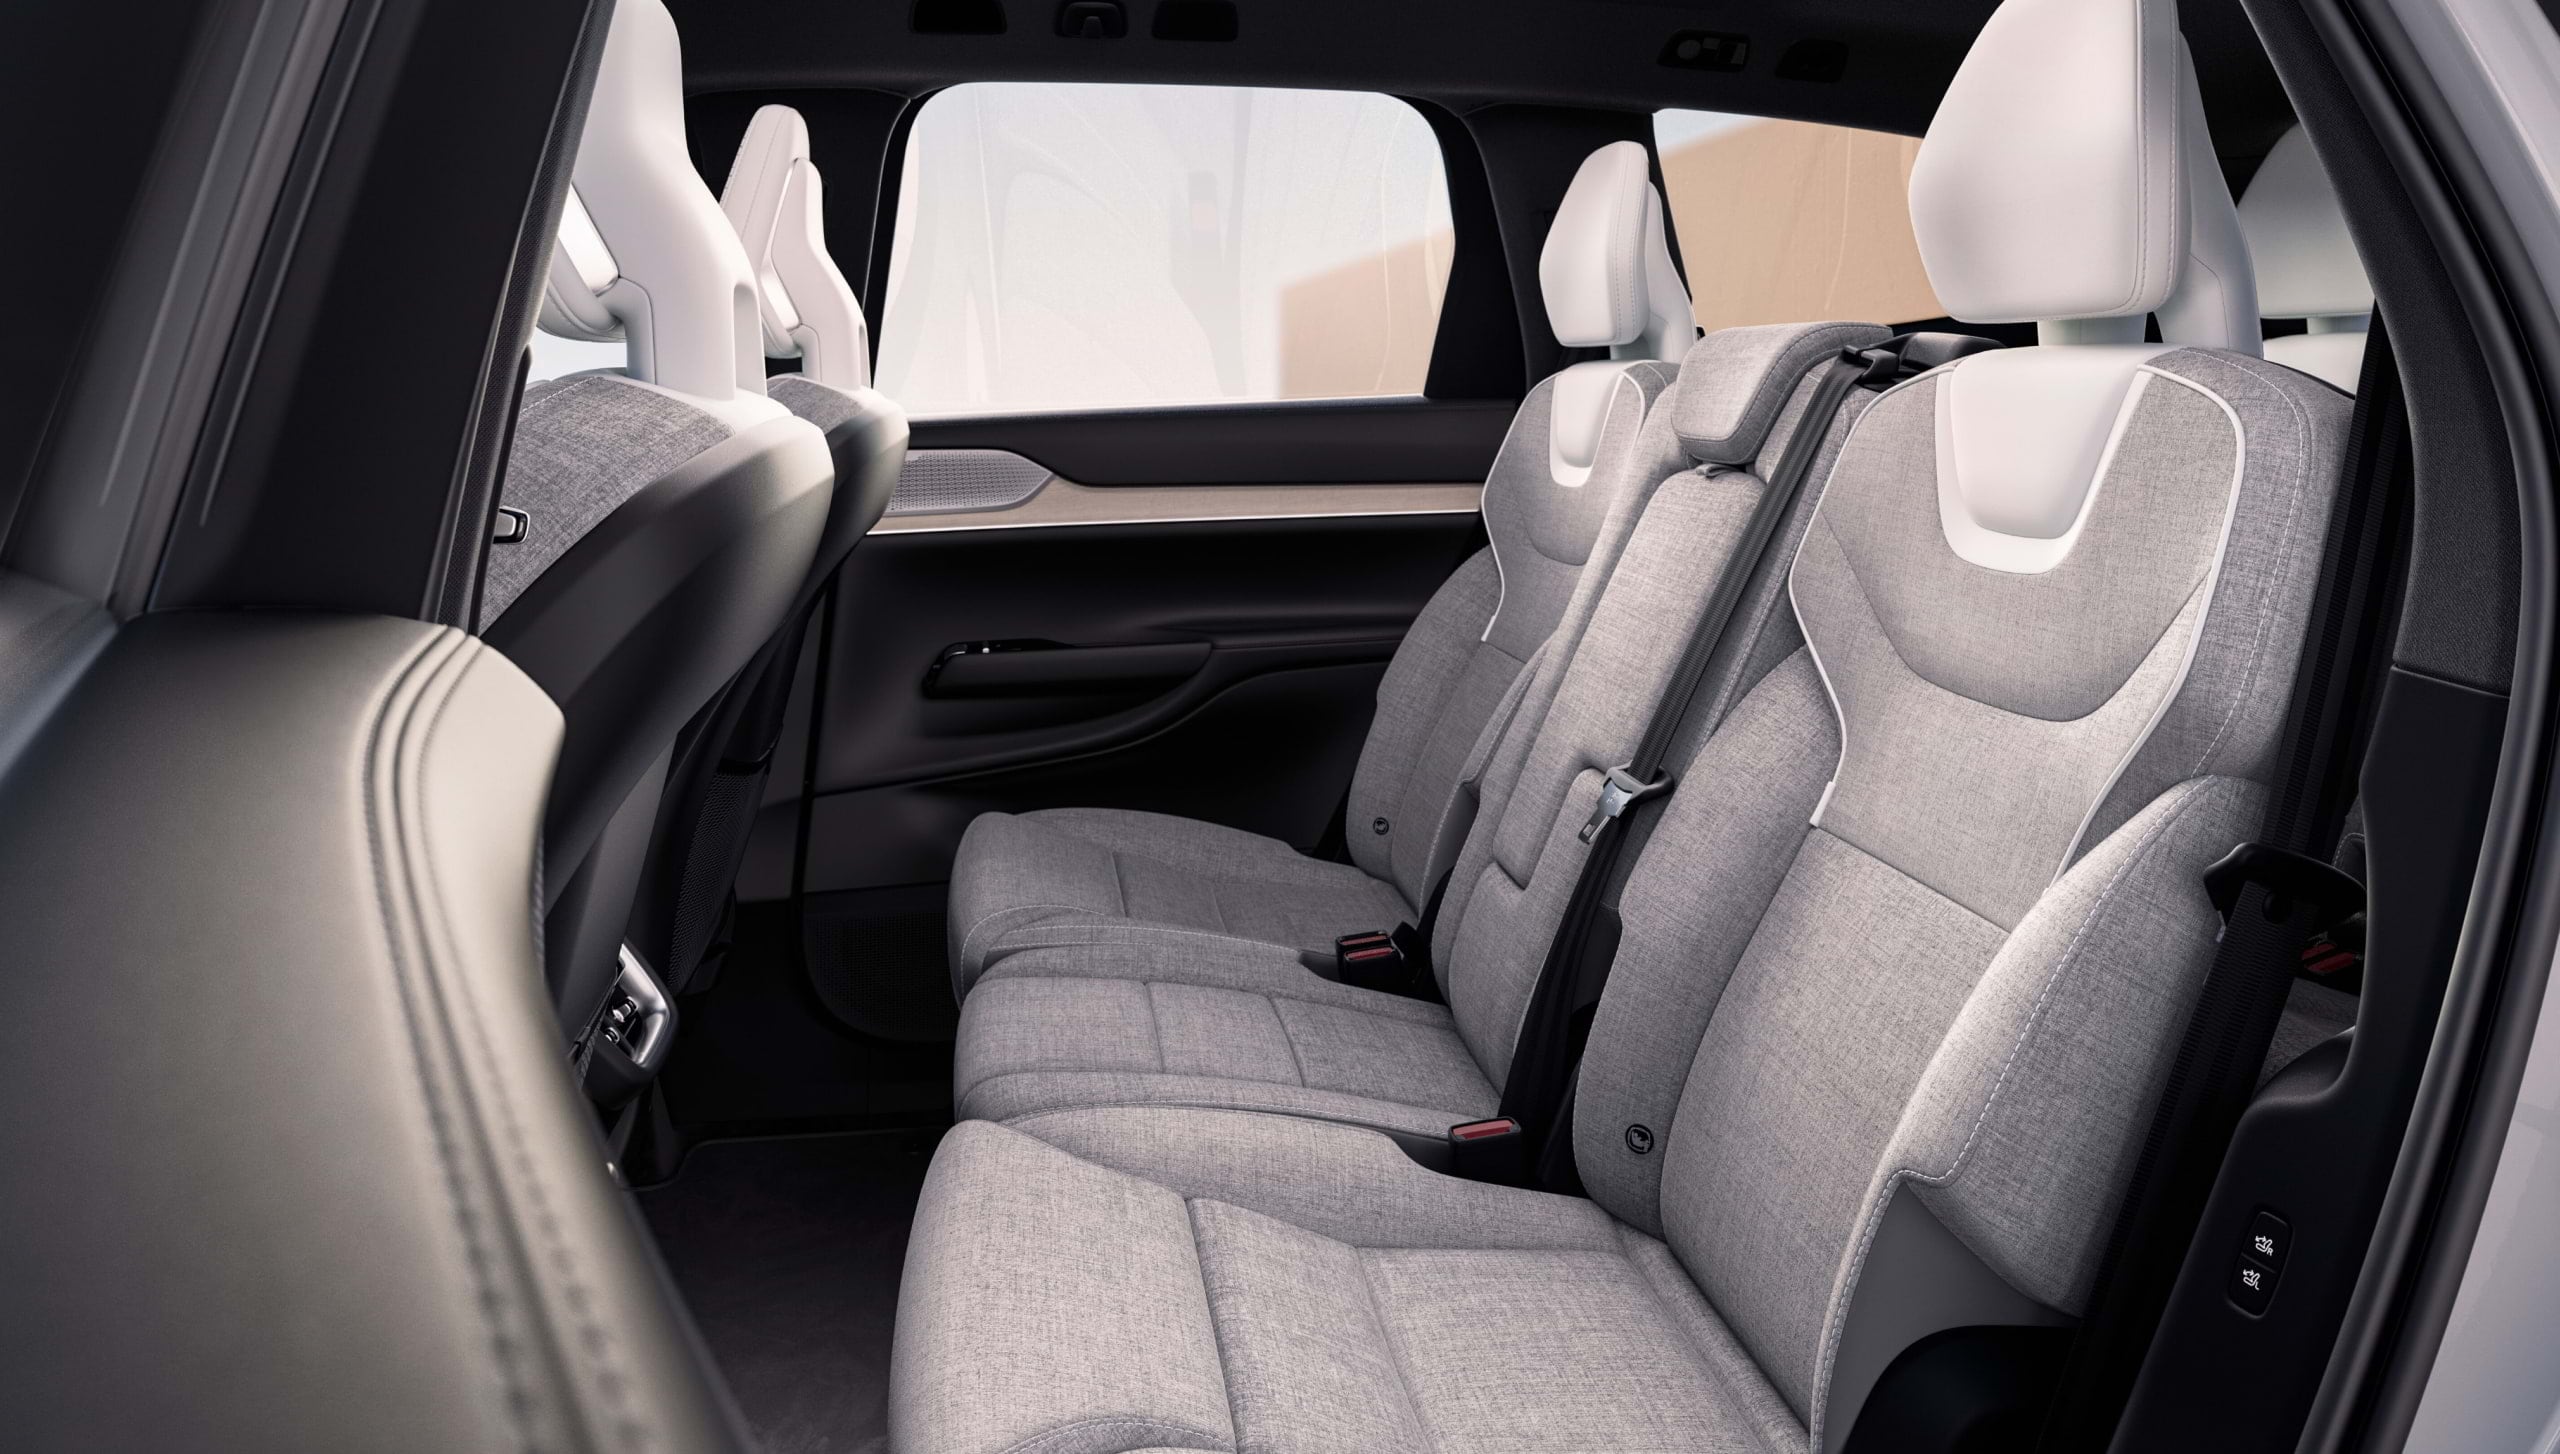 Volvo EX90 fully electric 7-seater SUV interior